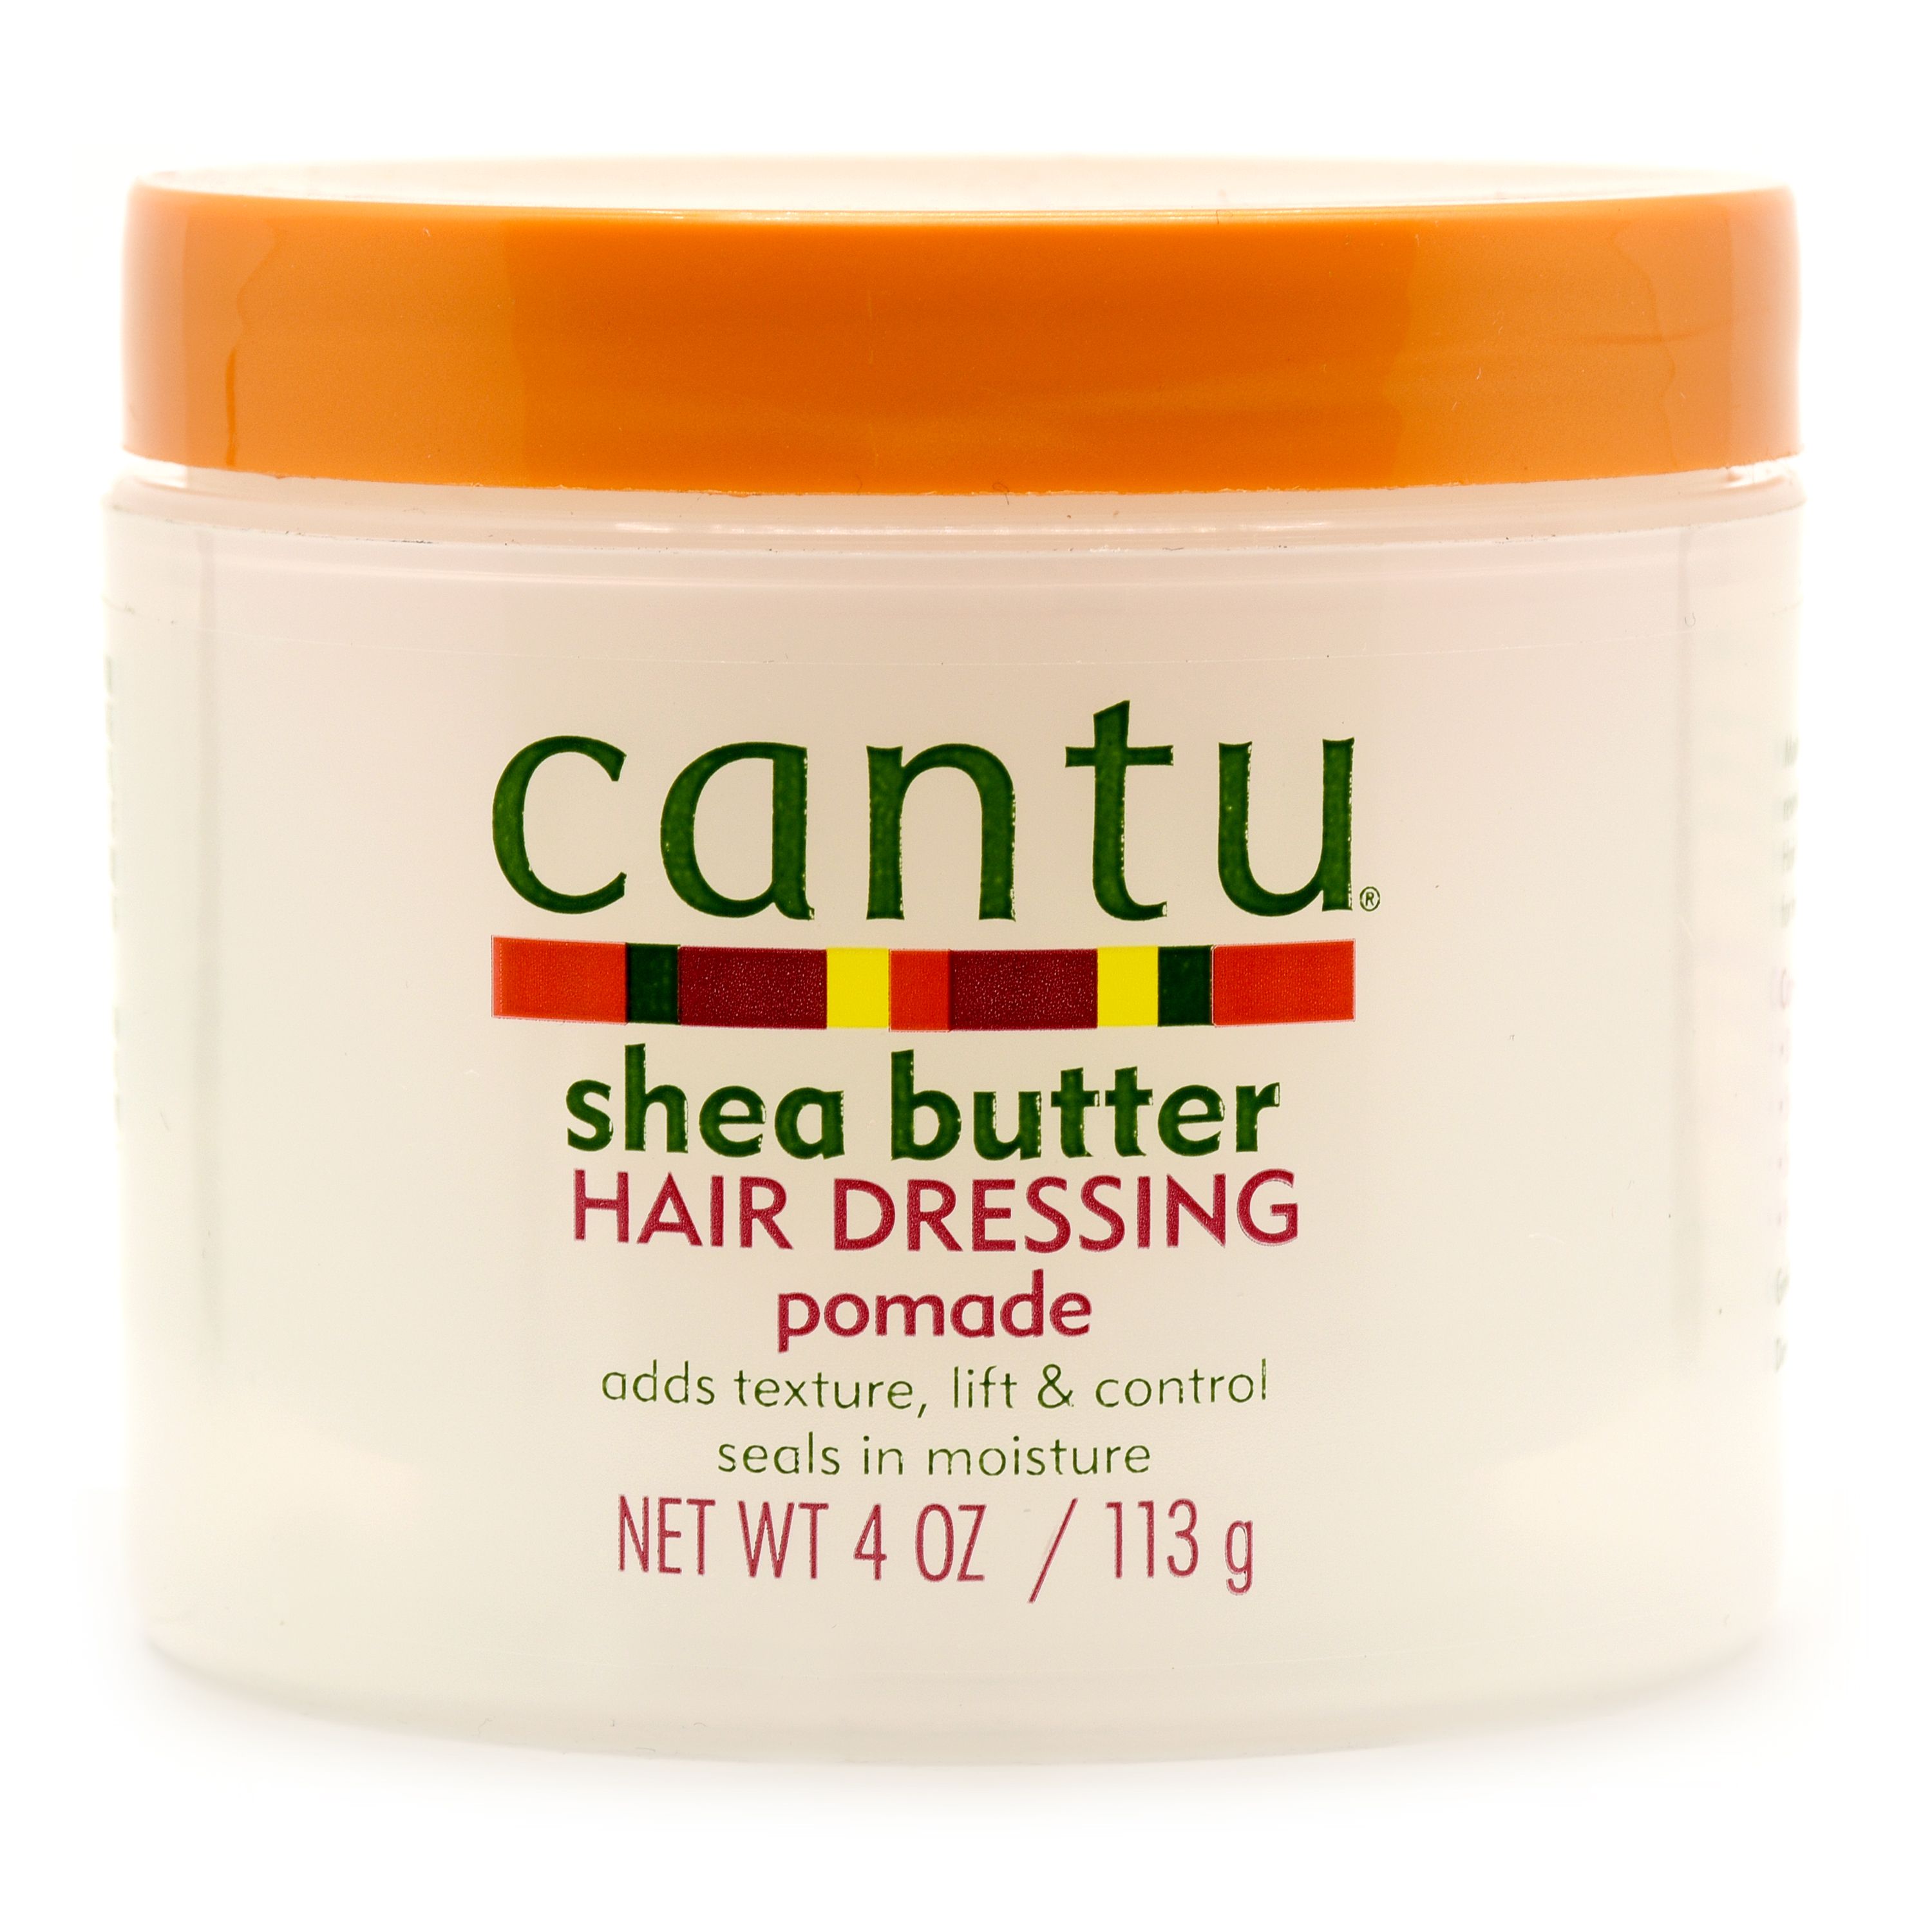 Cantu Shea Butter Hair Dressing Pomade - 113g